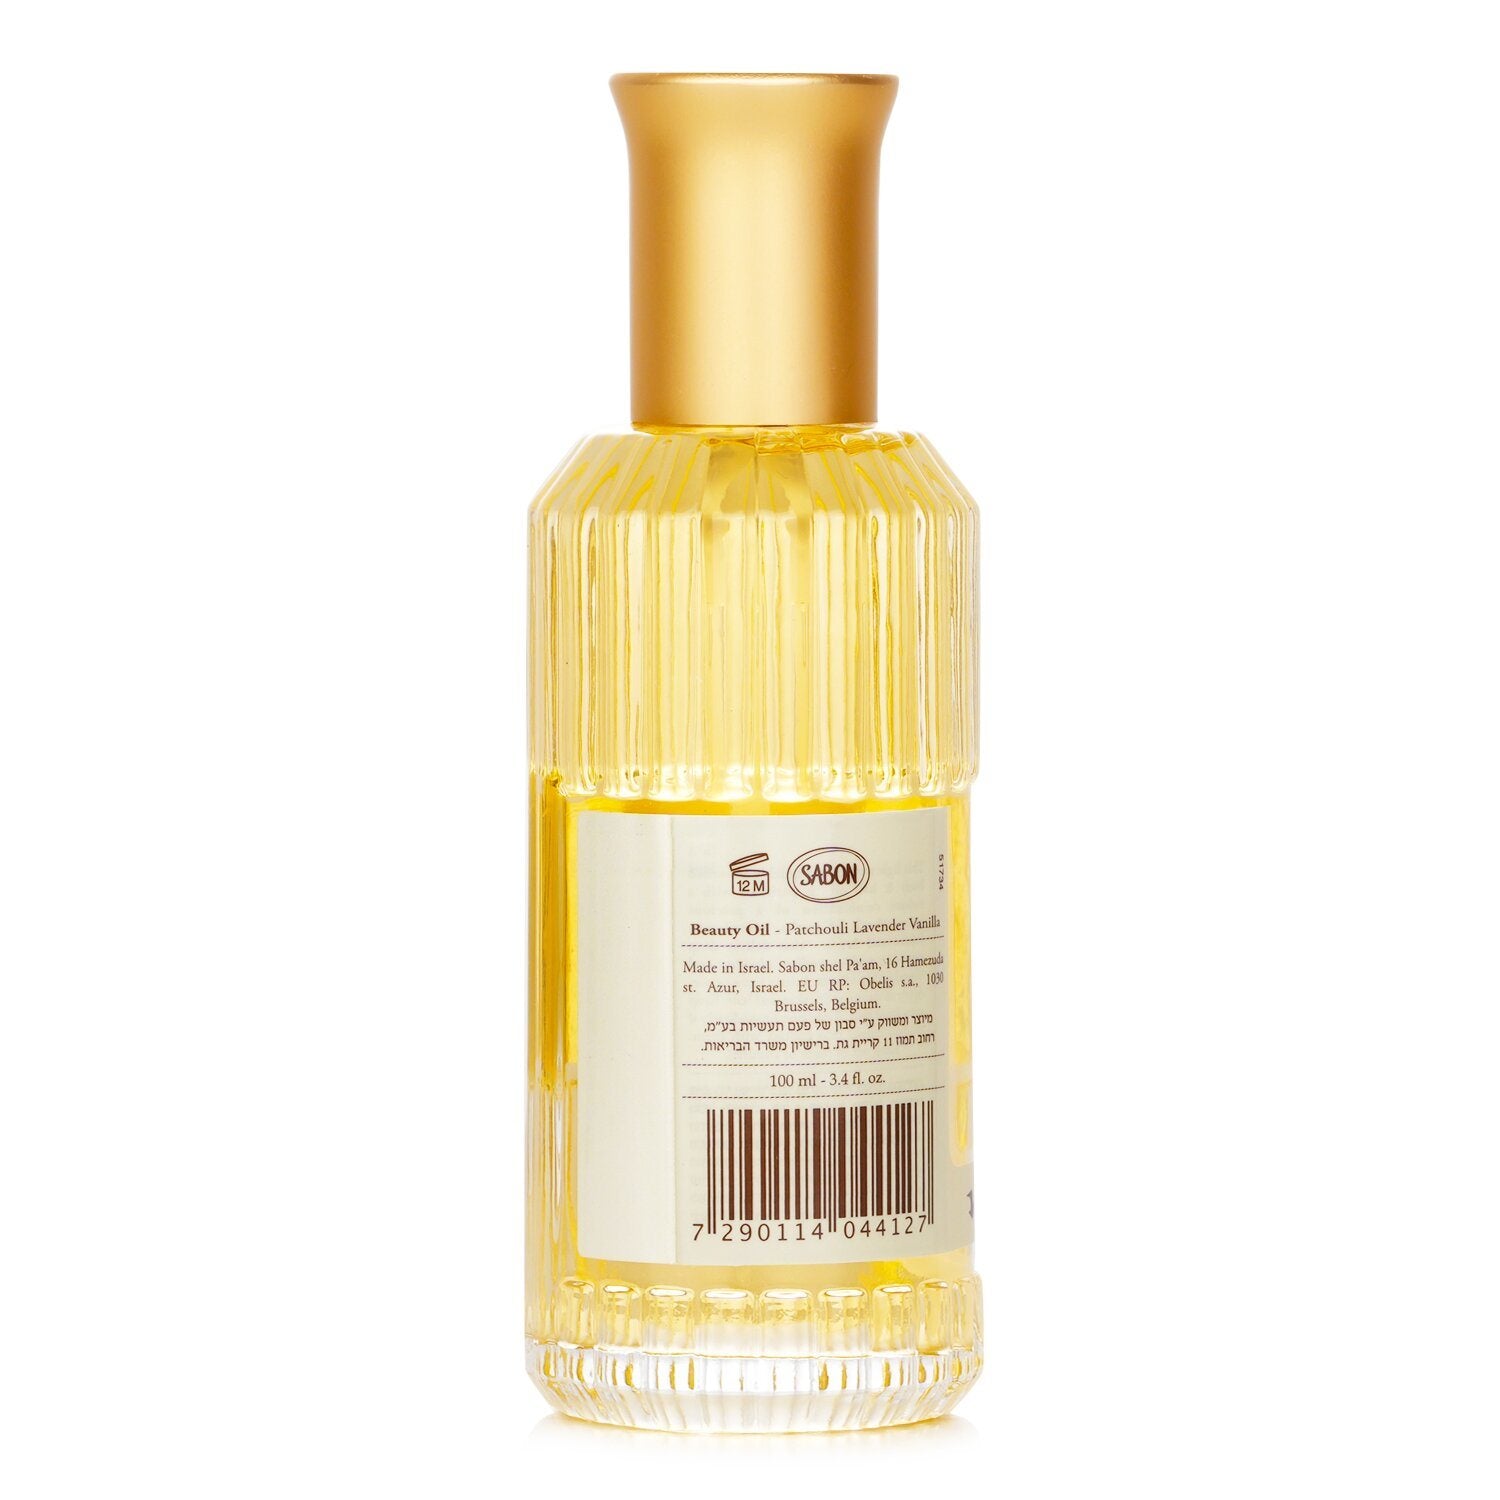 SABON - Beauty Oil - Patchouli Lavender Vanilla 044127 100ml/3.4oz - lolaluxeshop